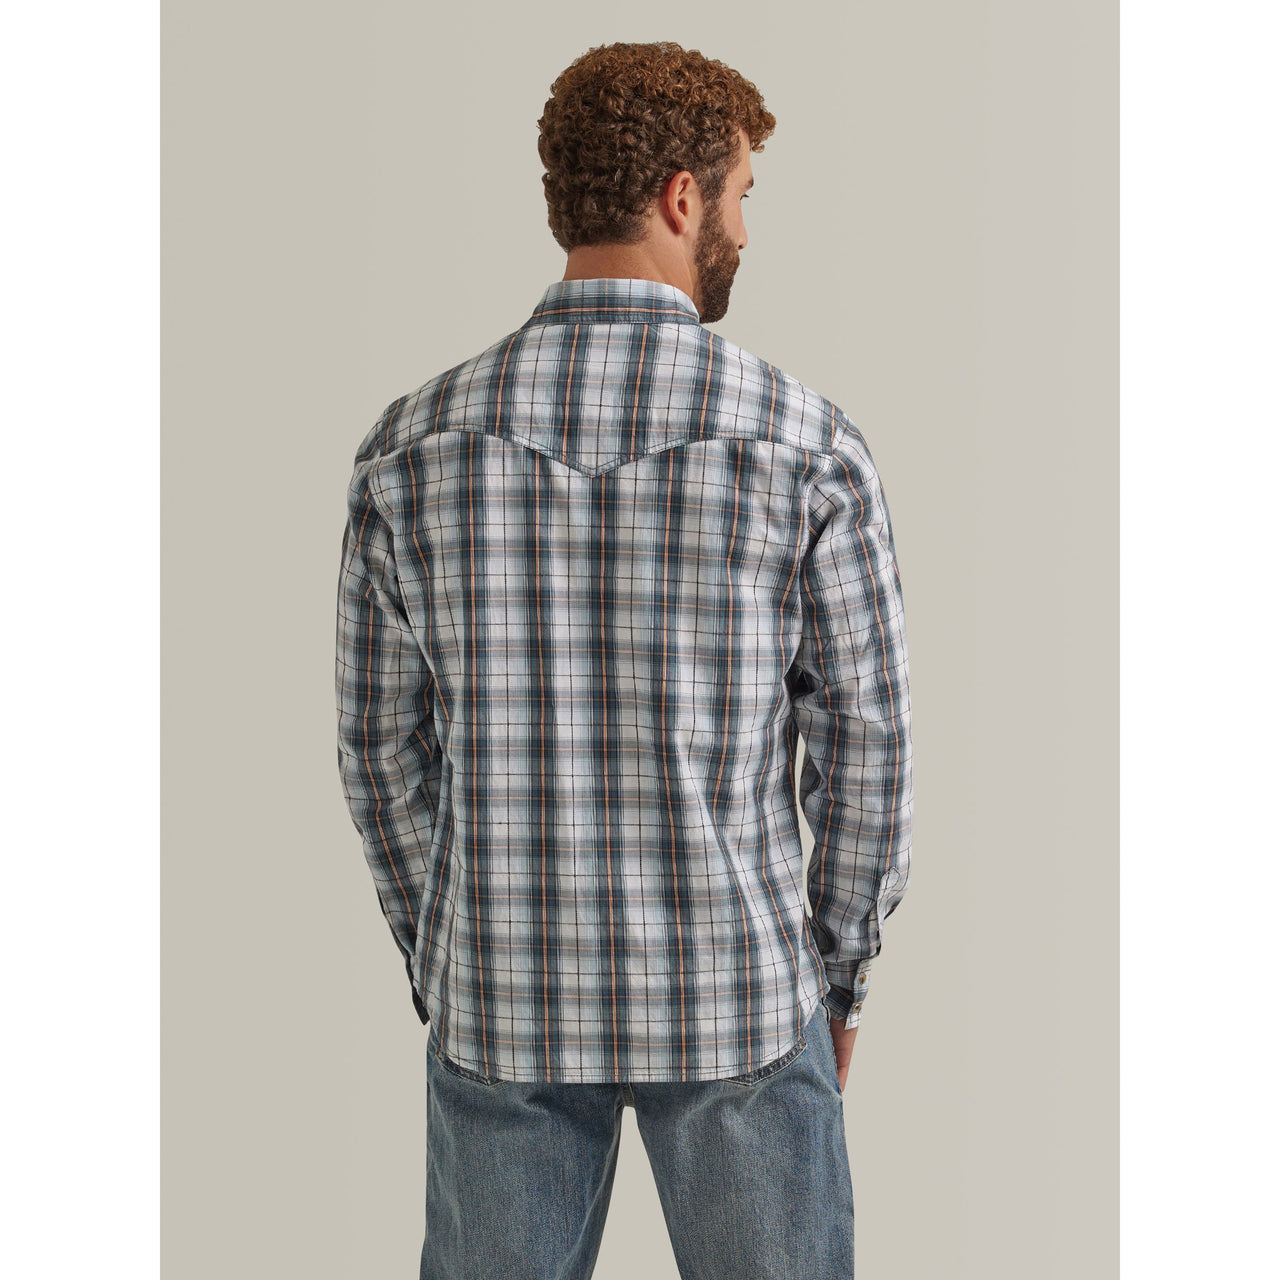 Wrangler Men's Retro Premium Long Sleeve Snap Plaid Shirt - Grey/Green